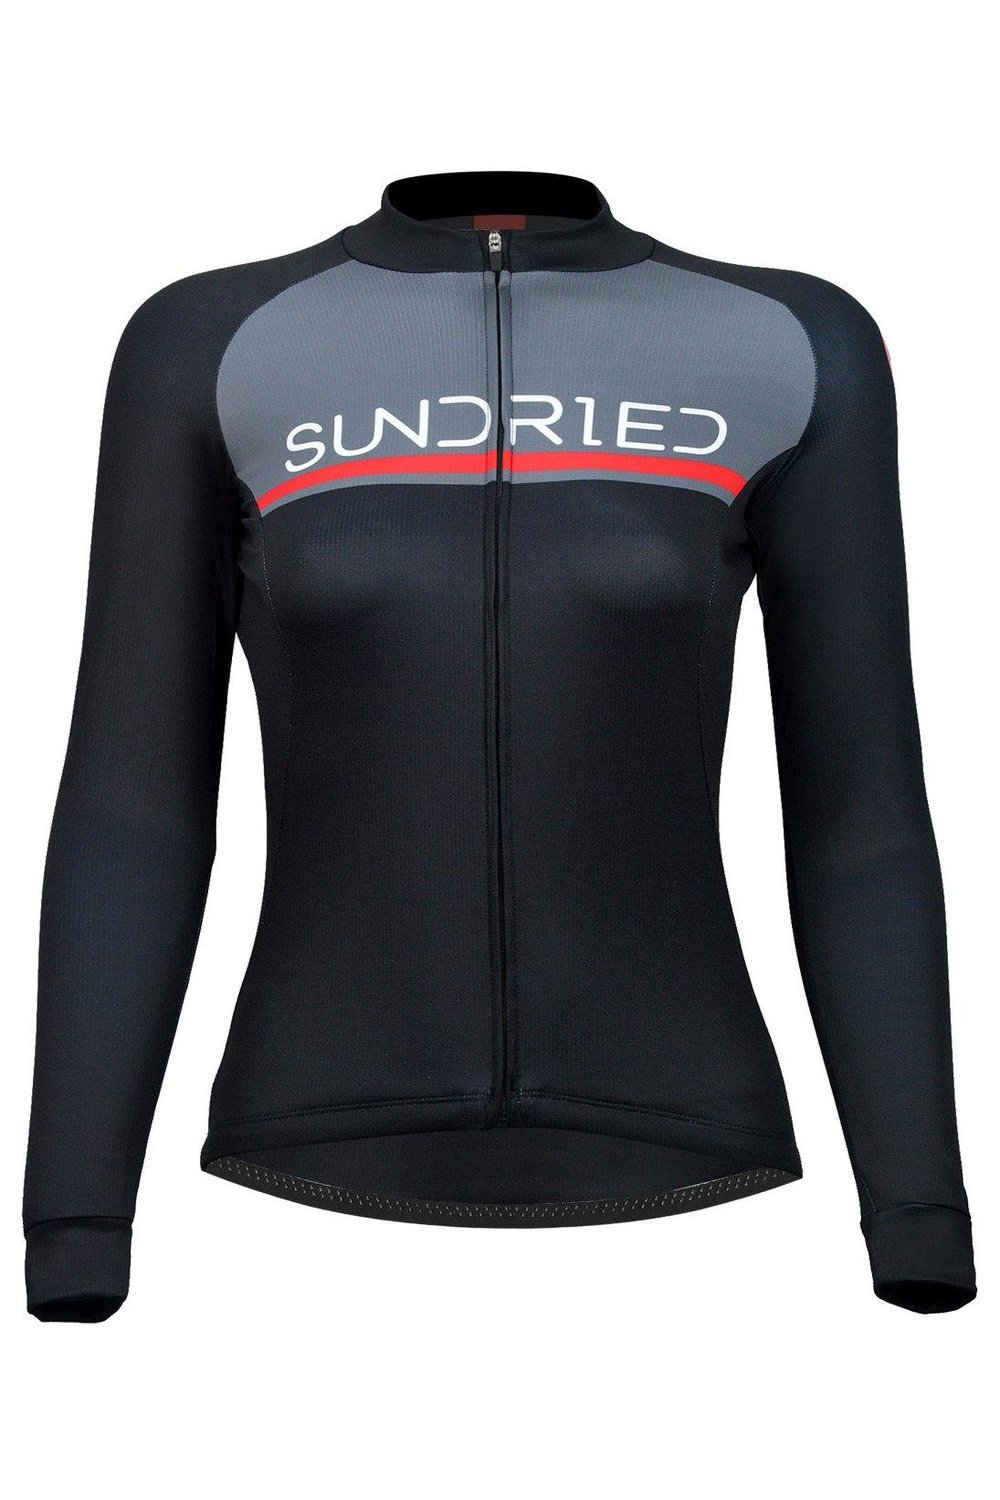 Sundried Rouleur Women's Long Sleeve Training Cycle Jersey Long Sleeve Jersey XS Black SD0123 XS Black Activewear